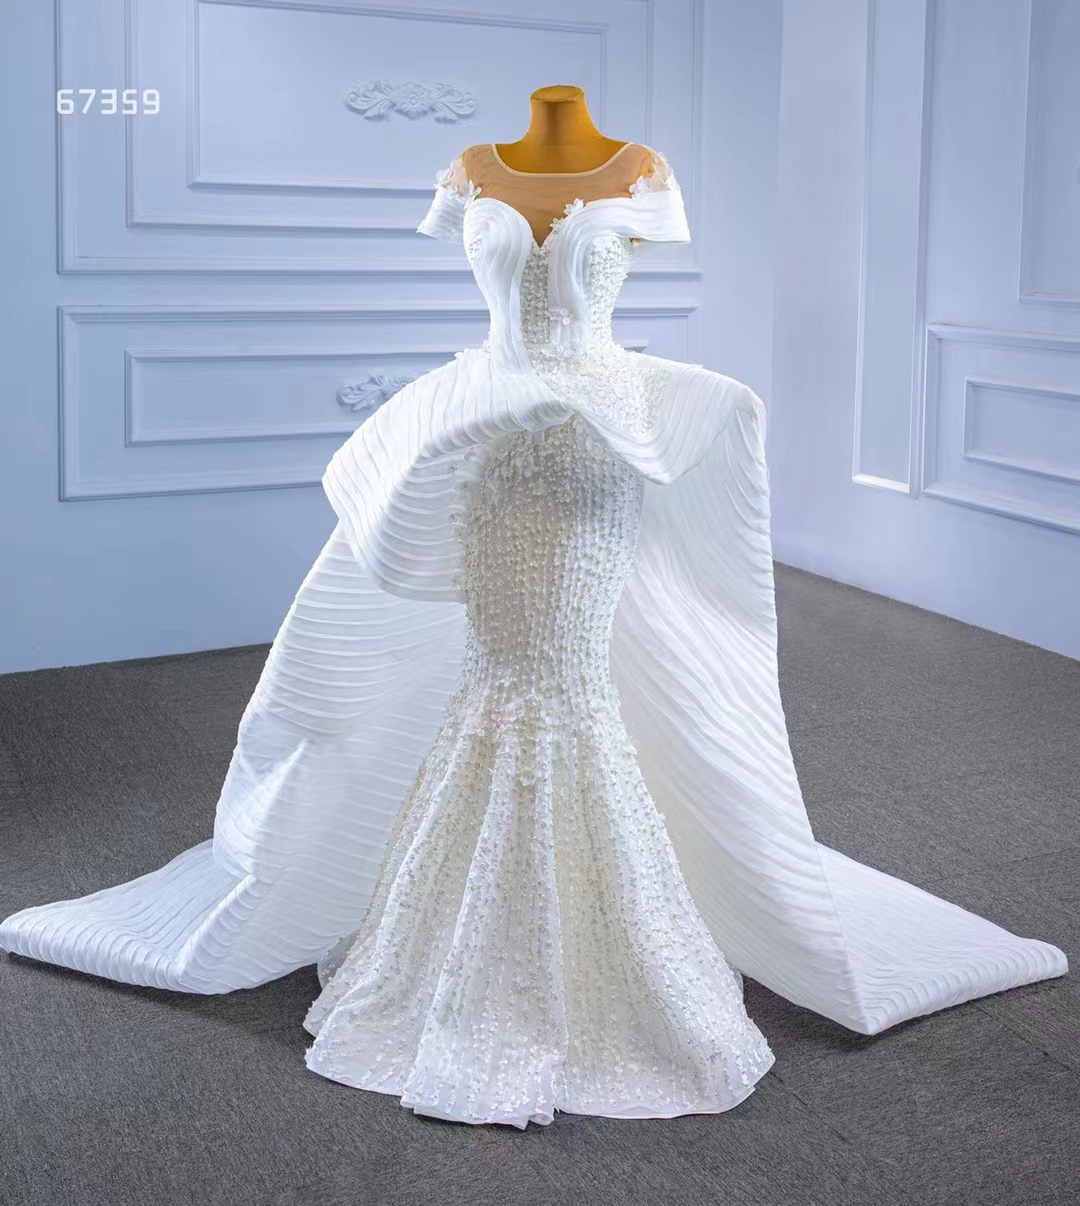 Robe de mariée chérie Design tendance luxe dentelle perlée lourde blanc SM67359